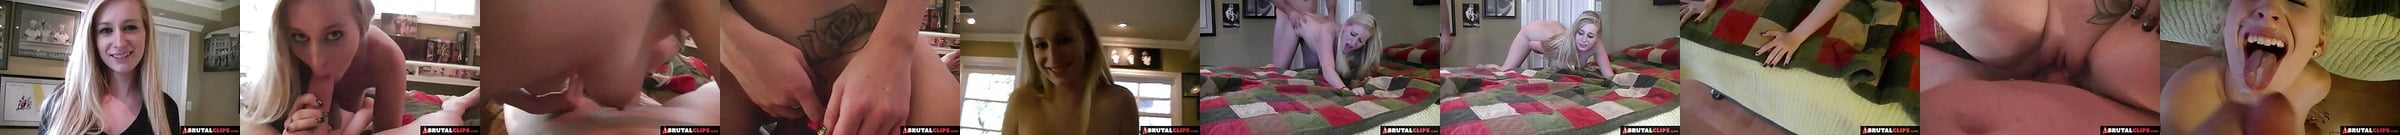 Stacie Jaxxx Free Porn Star Videos 80 Xhamster